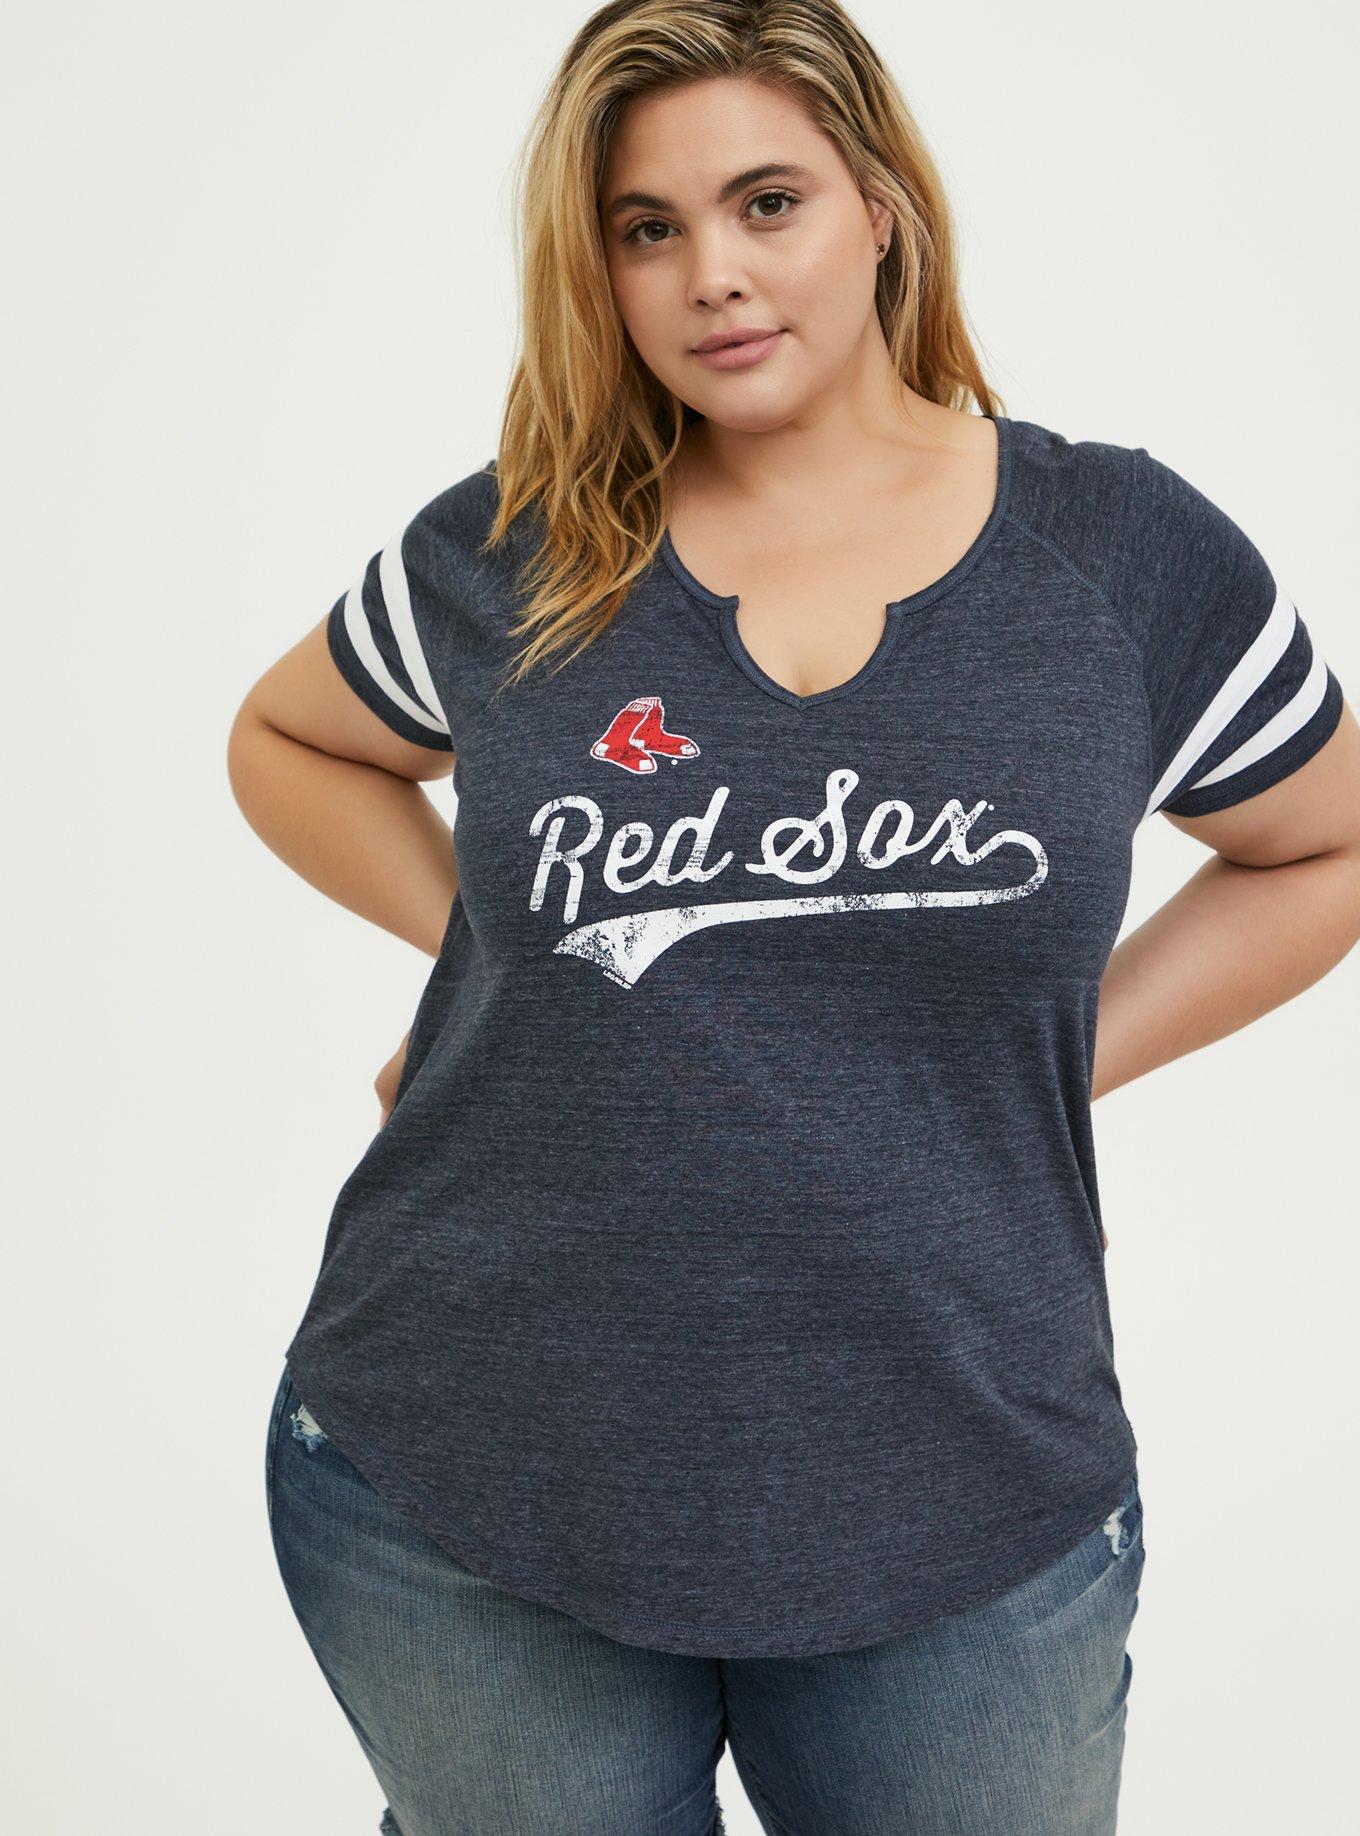 MLB Boston Red Sox Baseball Can't Stop Vs Boston Red Sox Women's T-Shirt